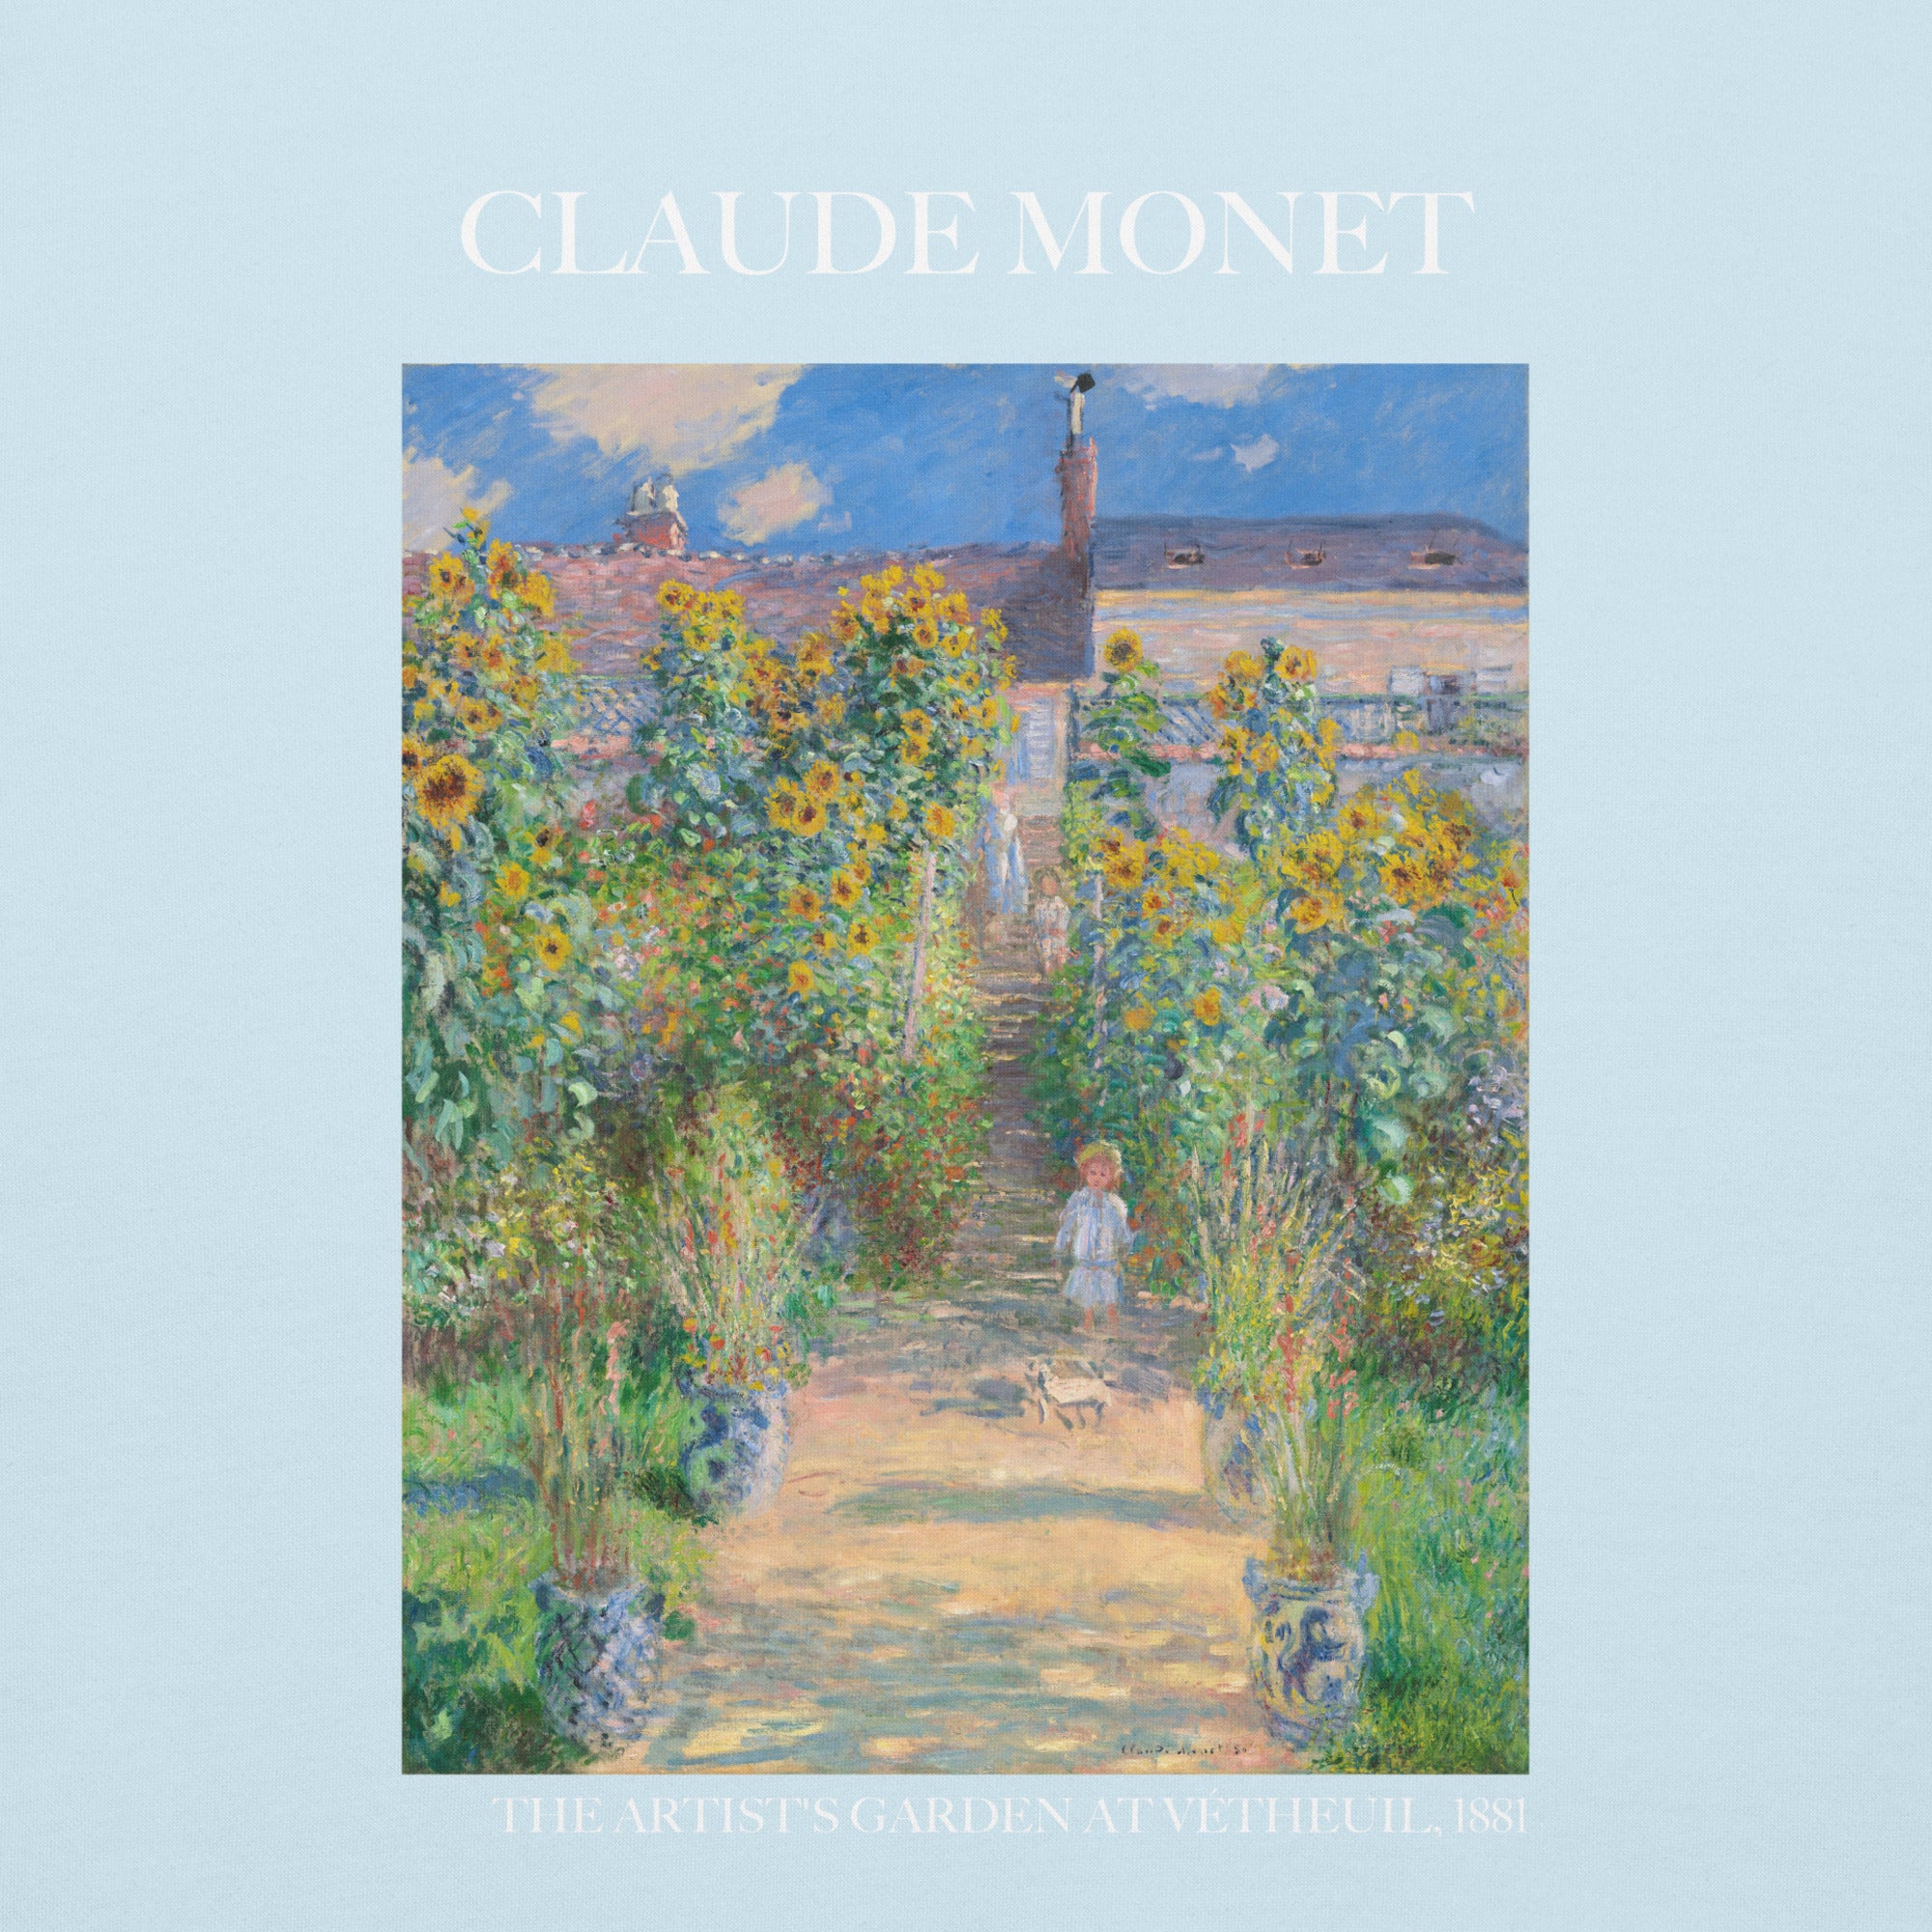 Claude Monet 'The Artist's Garden at Vétheuil' Famous Painting Hoodie | Unisex Premium Art Hoodie